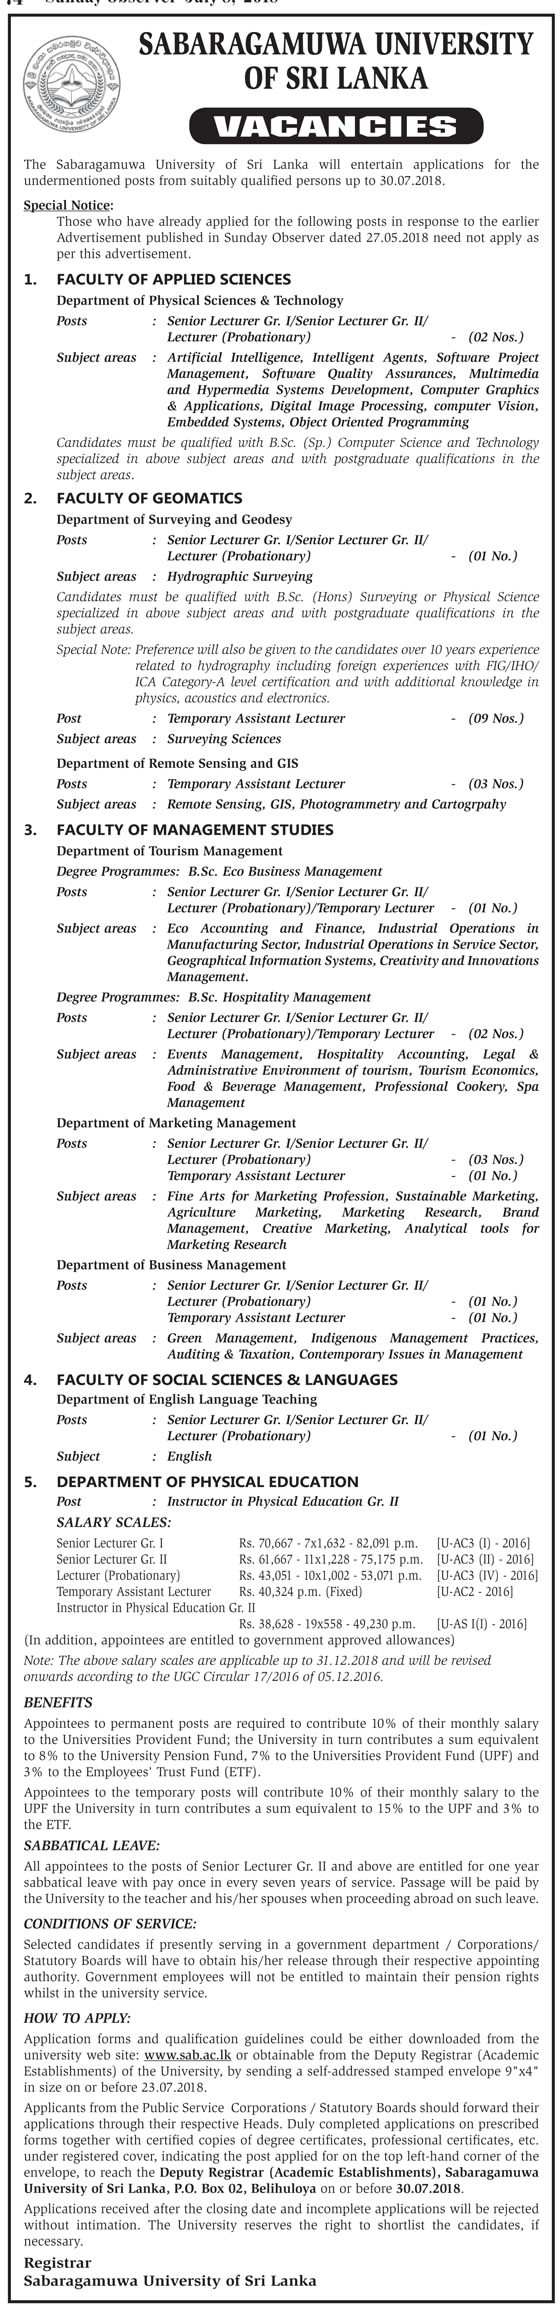 Senior Lecturer / Temporary Assistant Lecturer - Sabaragamuwa University Jobs Vacancies